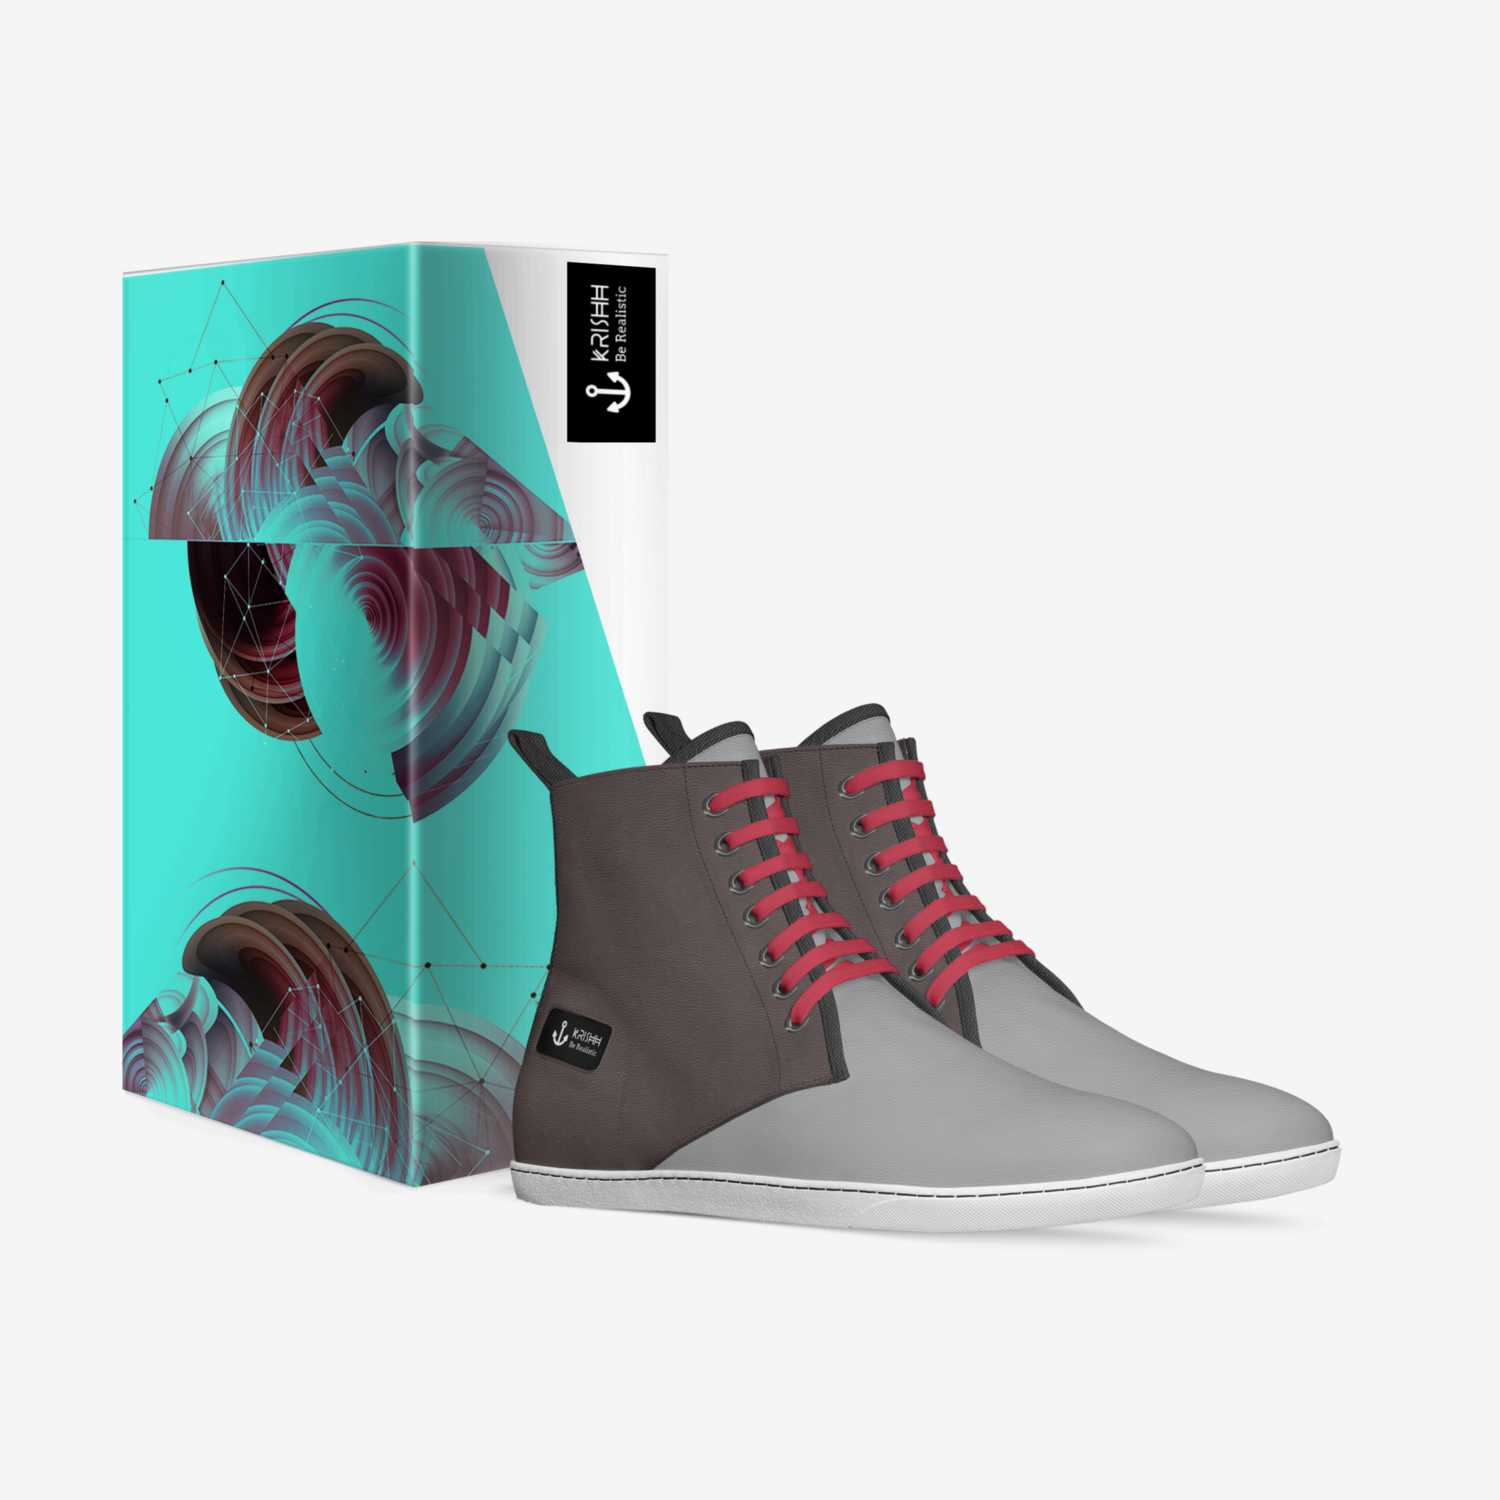 Hi custom made in Italy shoes by Shivam Hirani | Box view